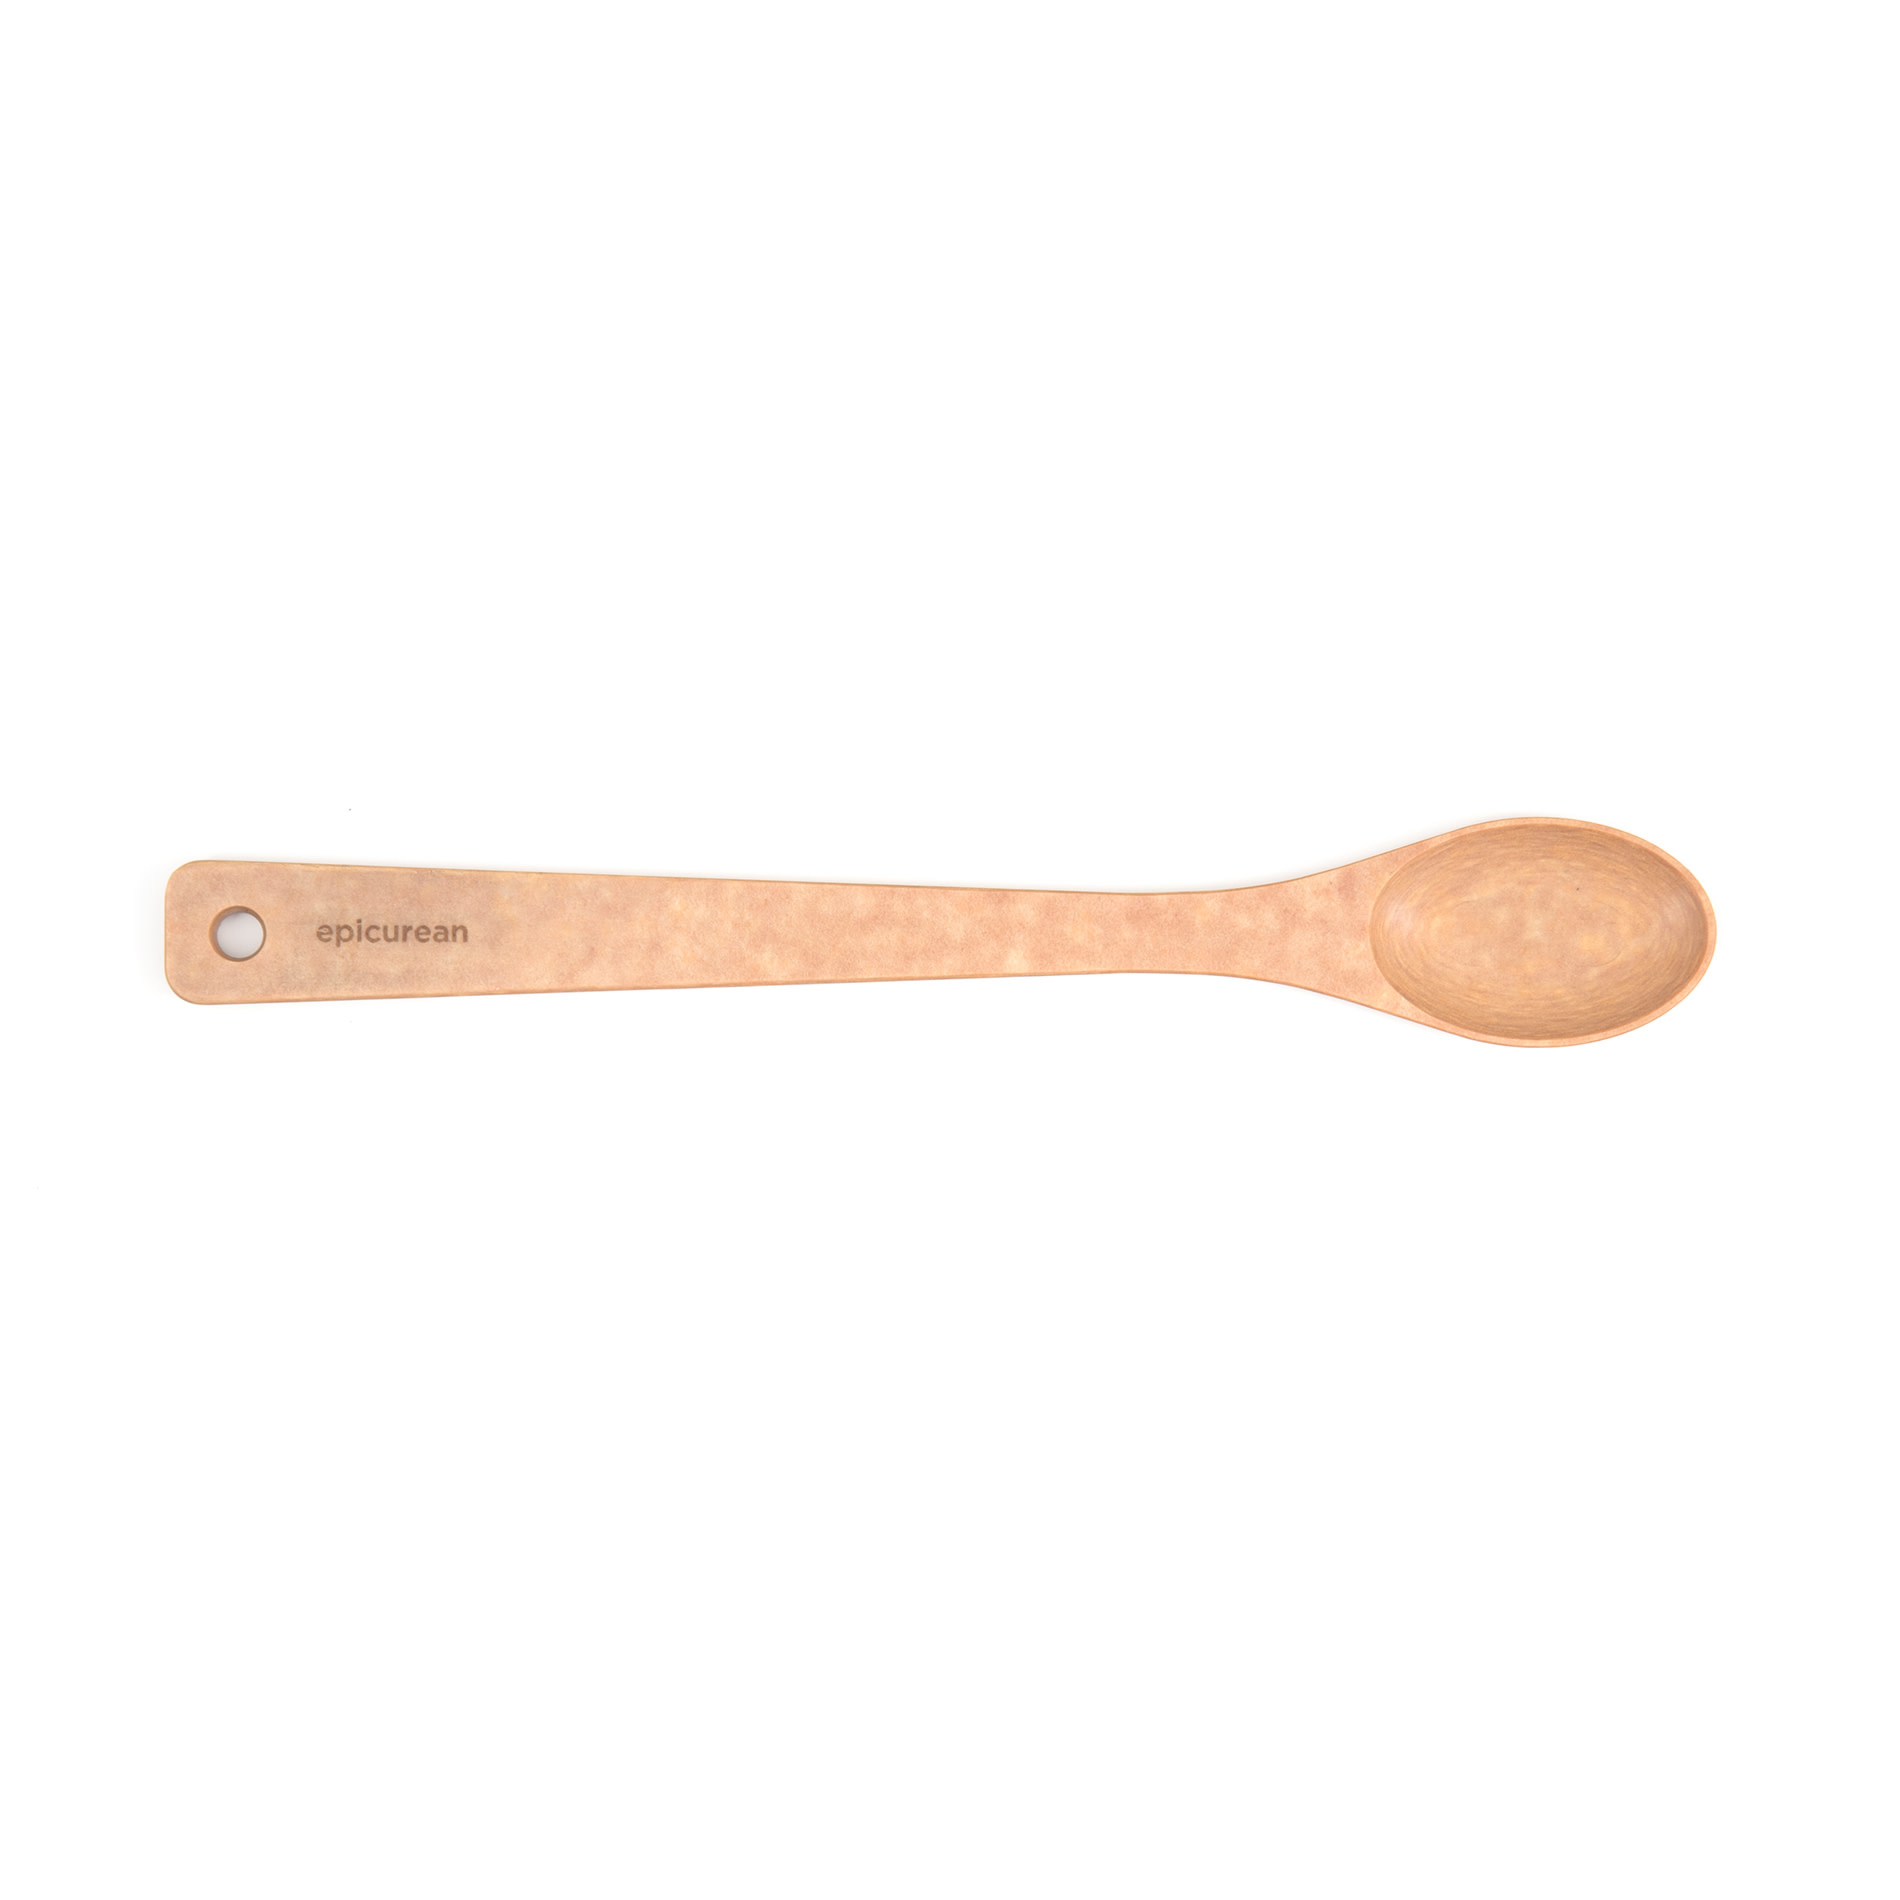 https://cdn.shoplightspeed.com/shops/652247/files/43426435/epicurean-chef-series-utensils-small-spoon-natural.jpg